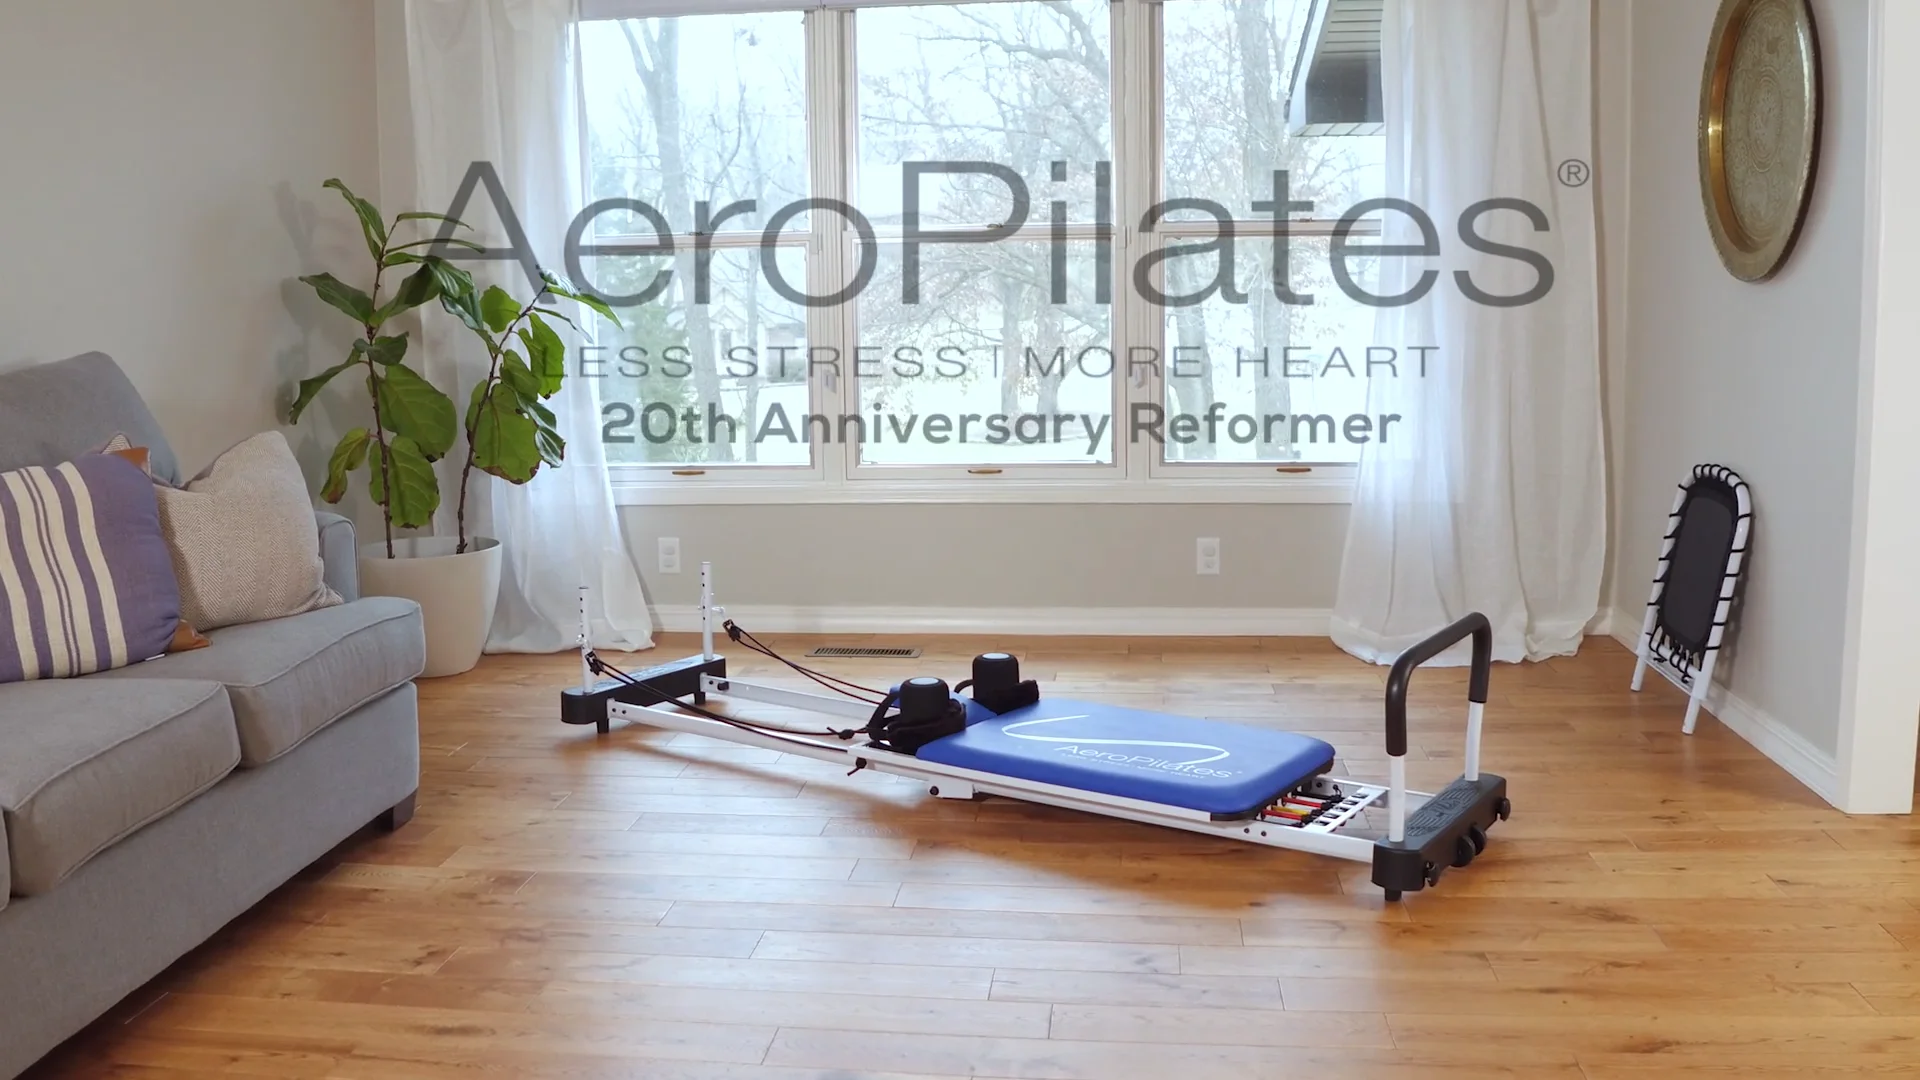 What is AeroPilates? on Vimeo